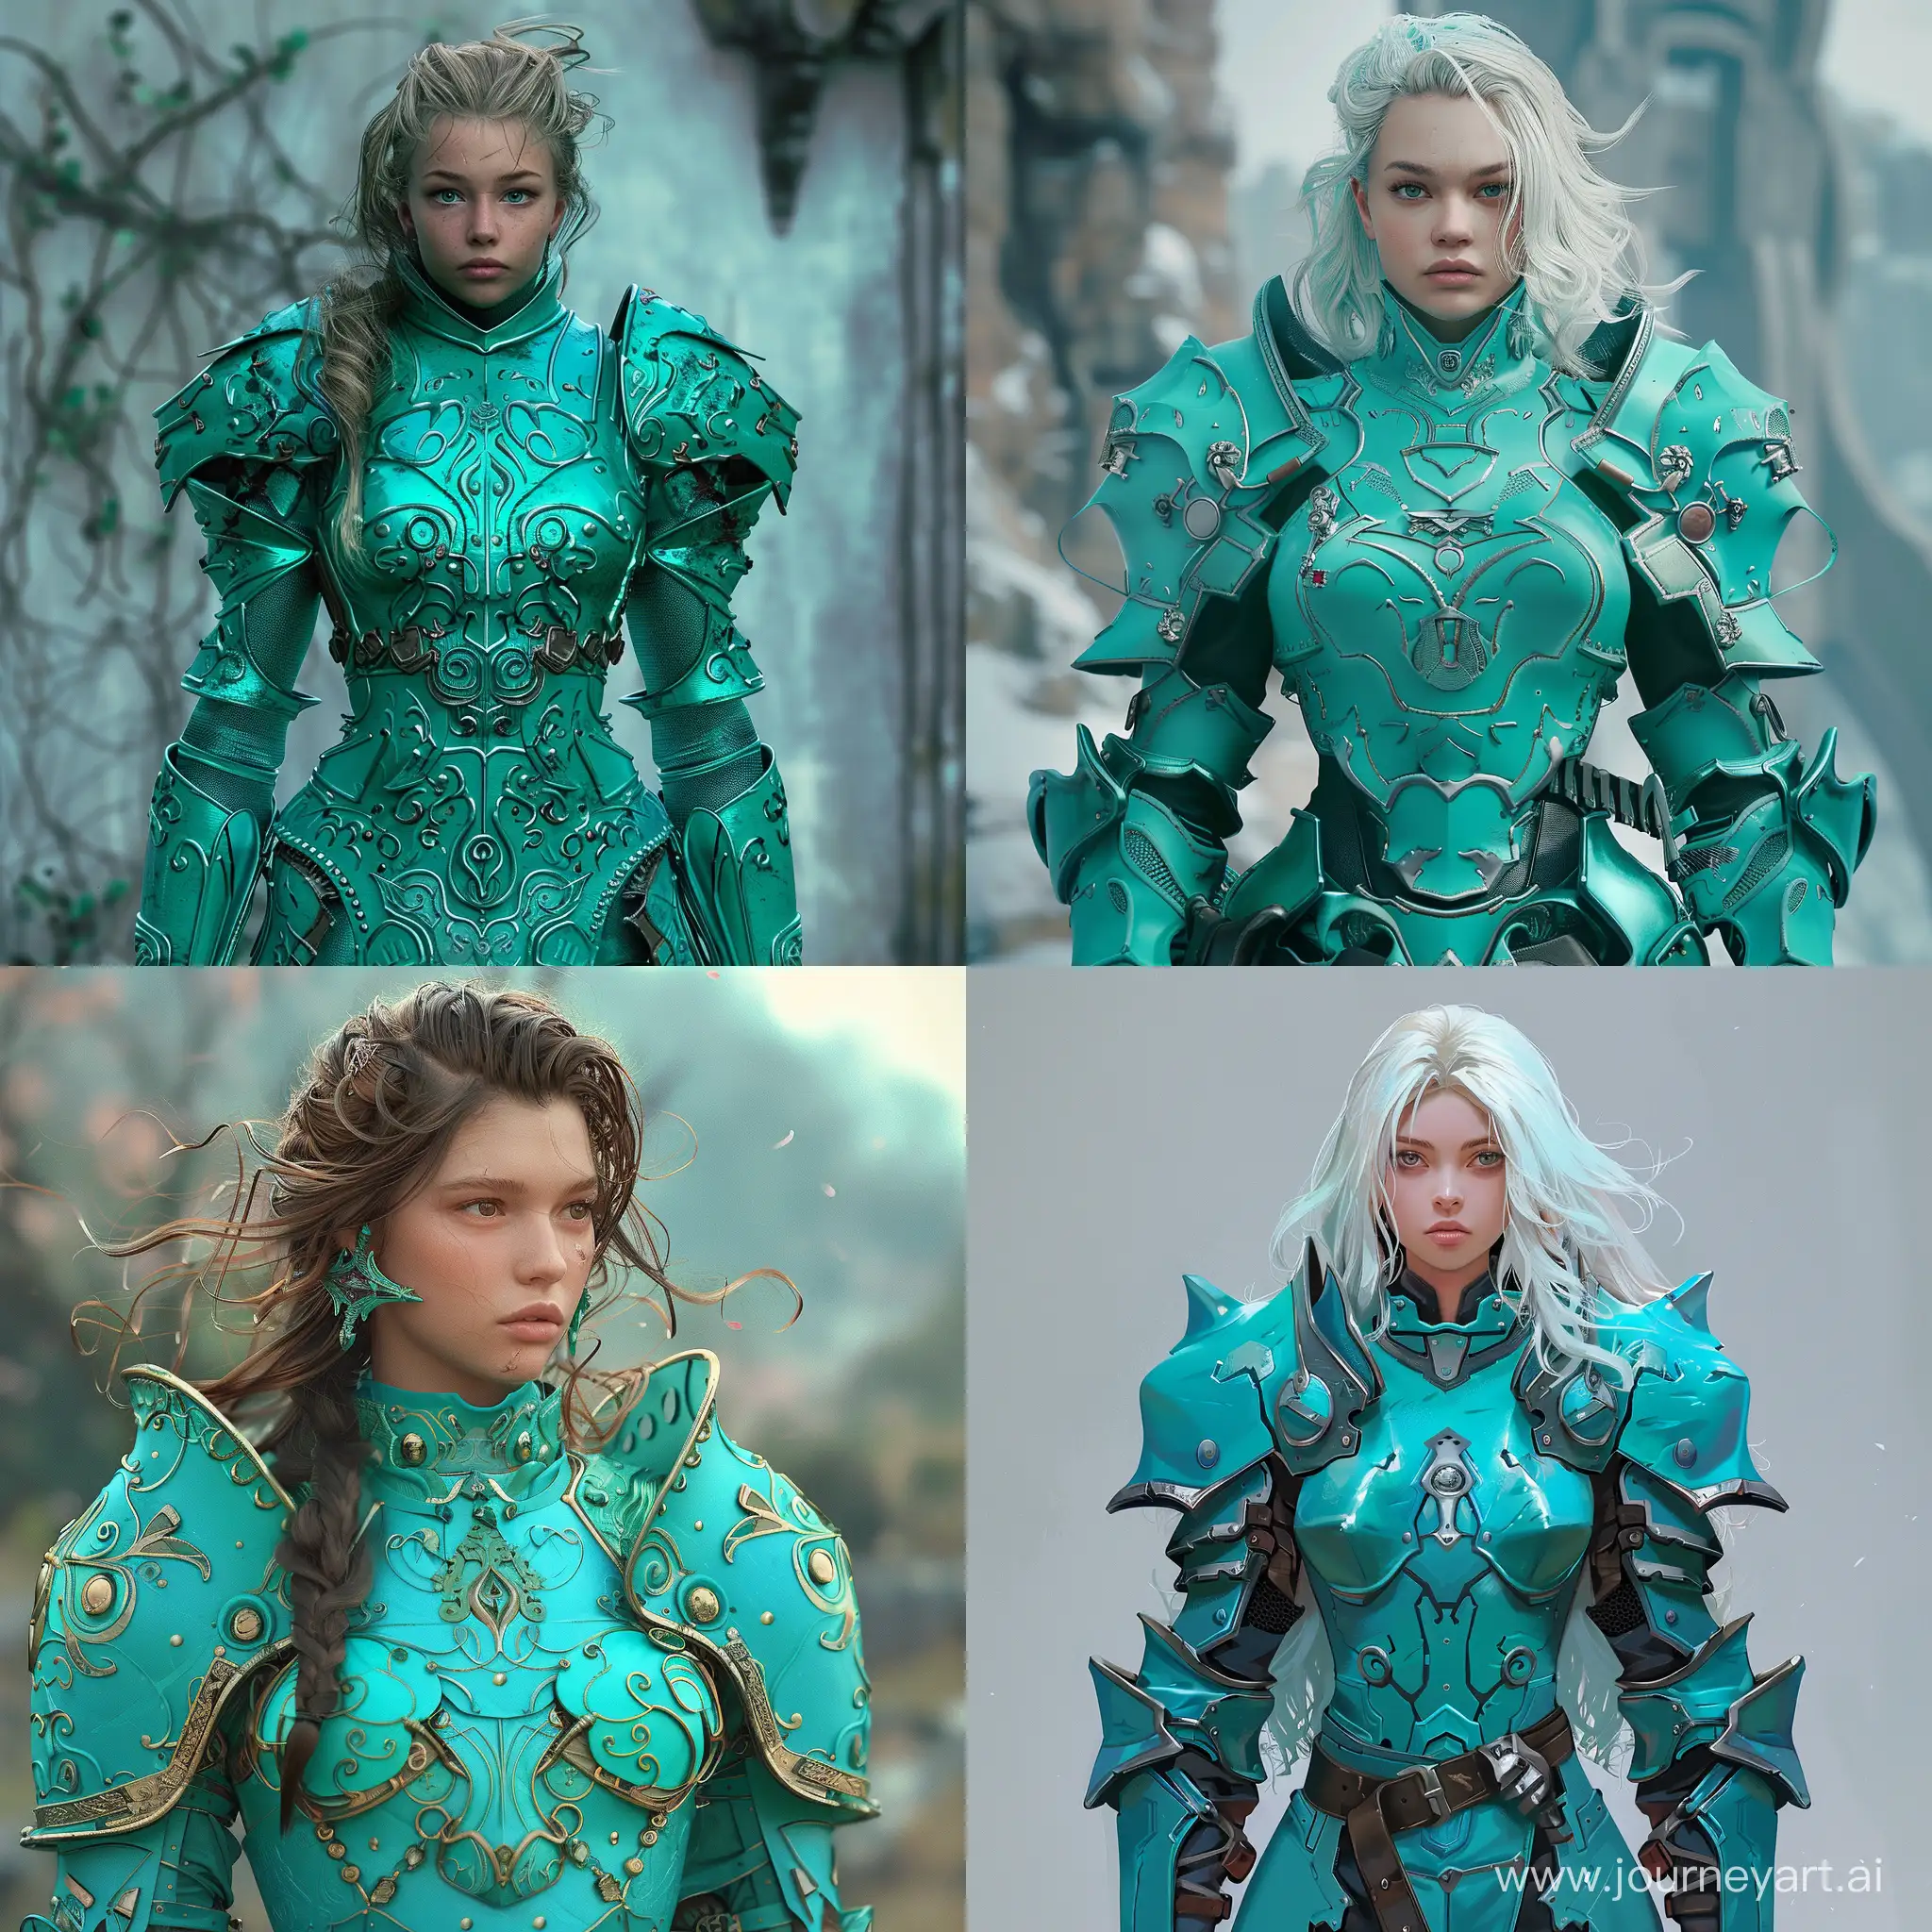 Turquoise-Armorclad-Warrior-Girl-Fantasy-Art